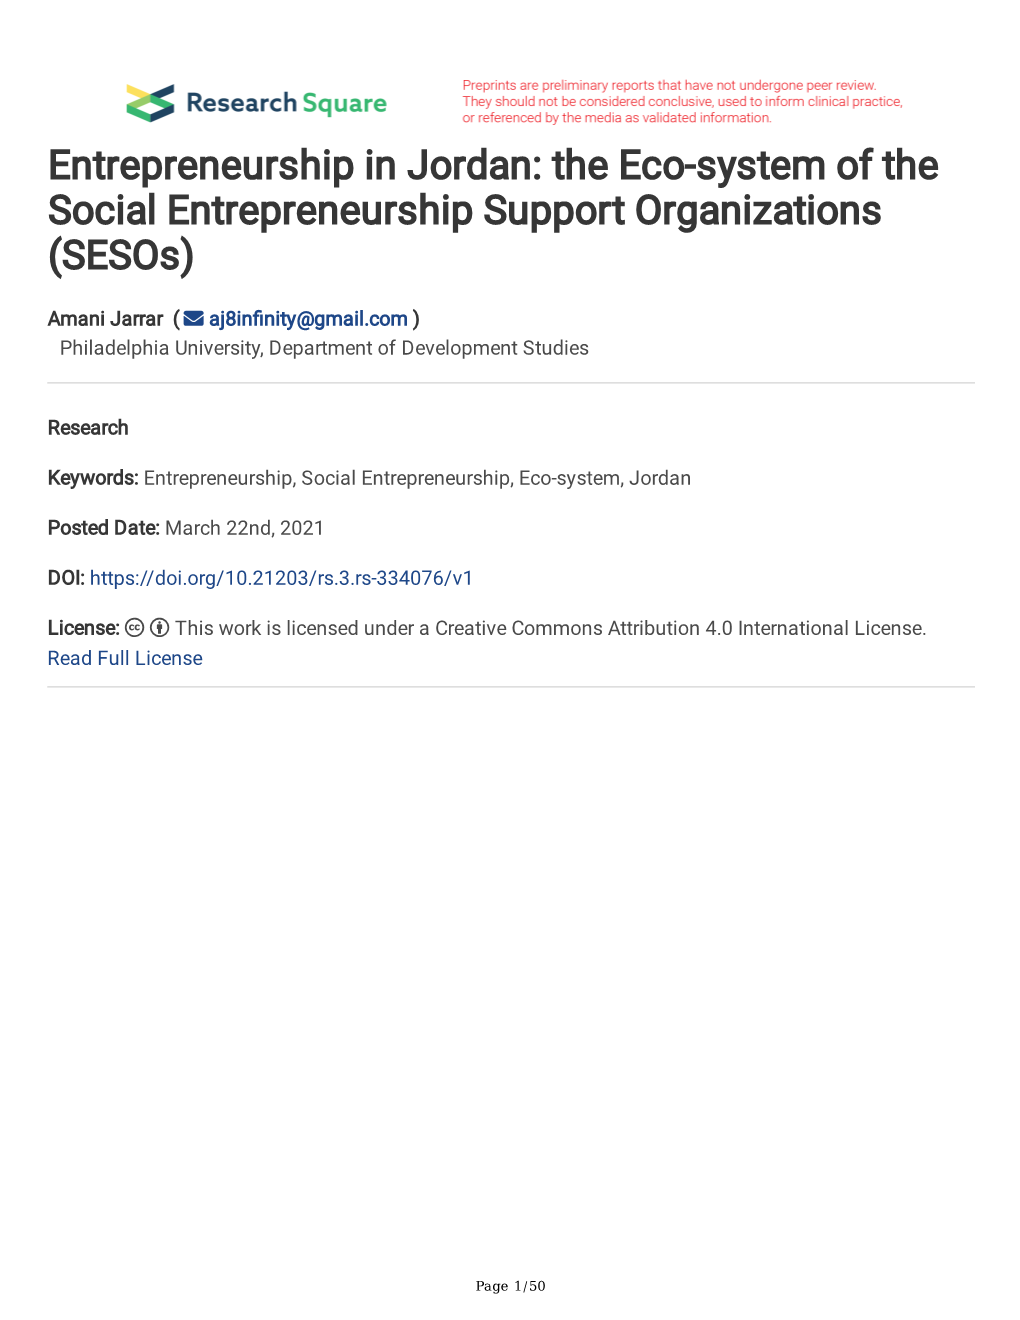 Entrepreneurship in Jordan: the Eco-System of the Social Entrepreneurship Support Organizations (Sesos)